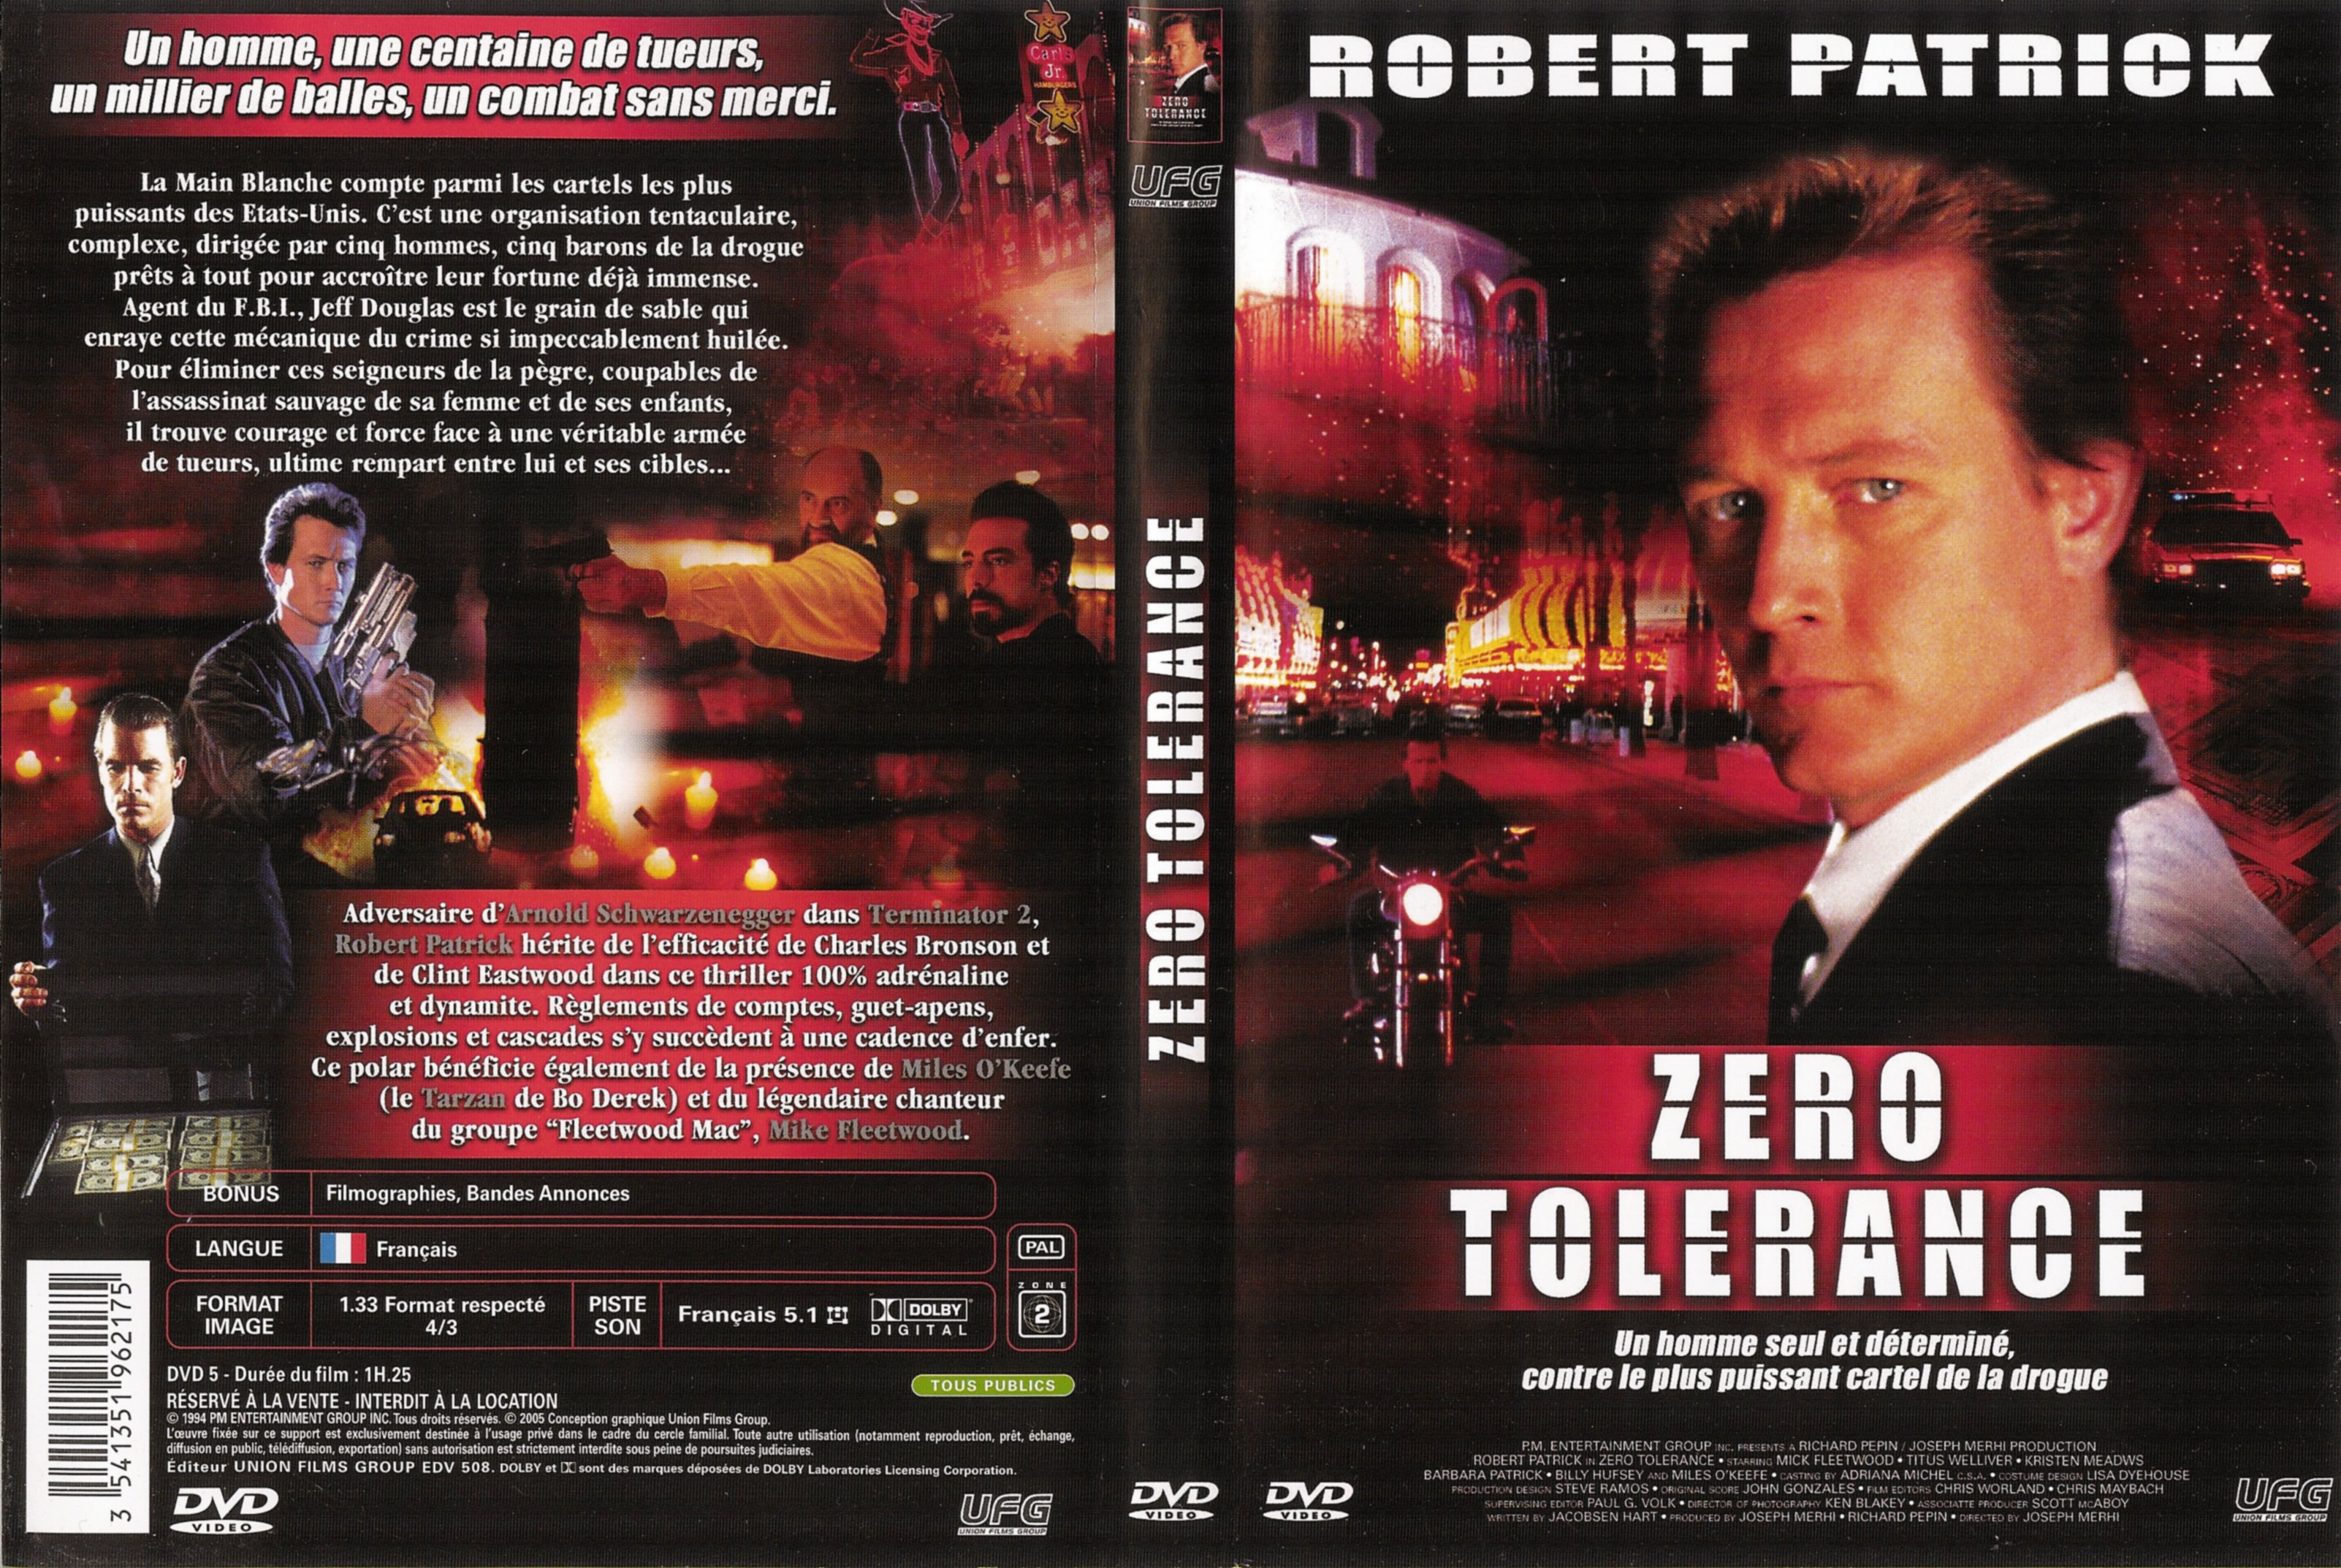 Jaquette DVD Zero tolerance